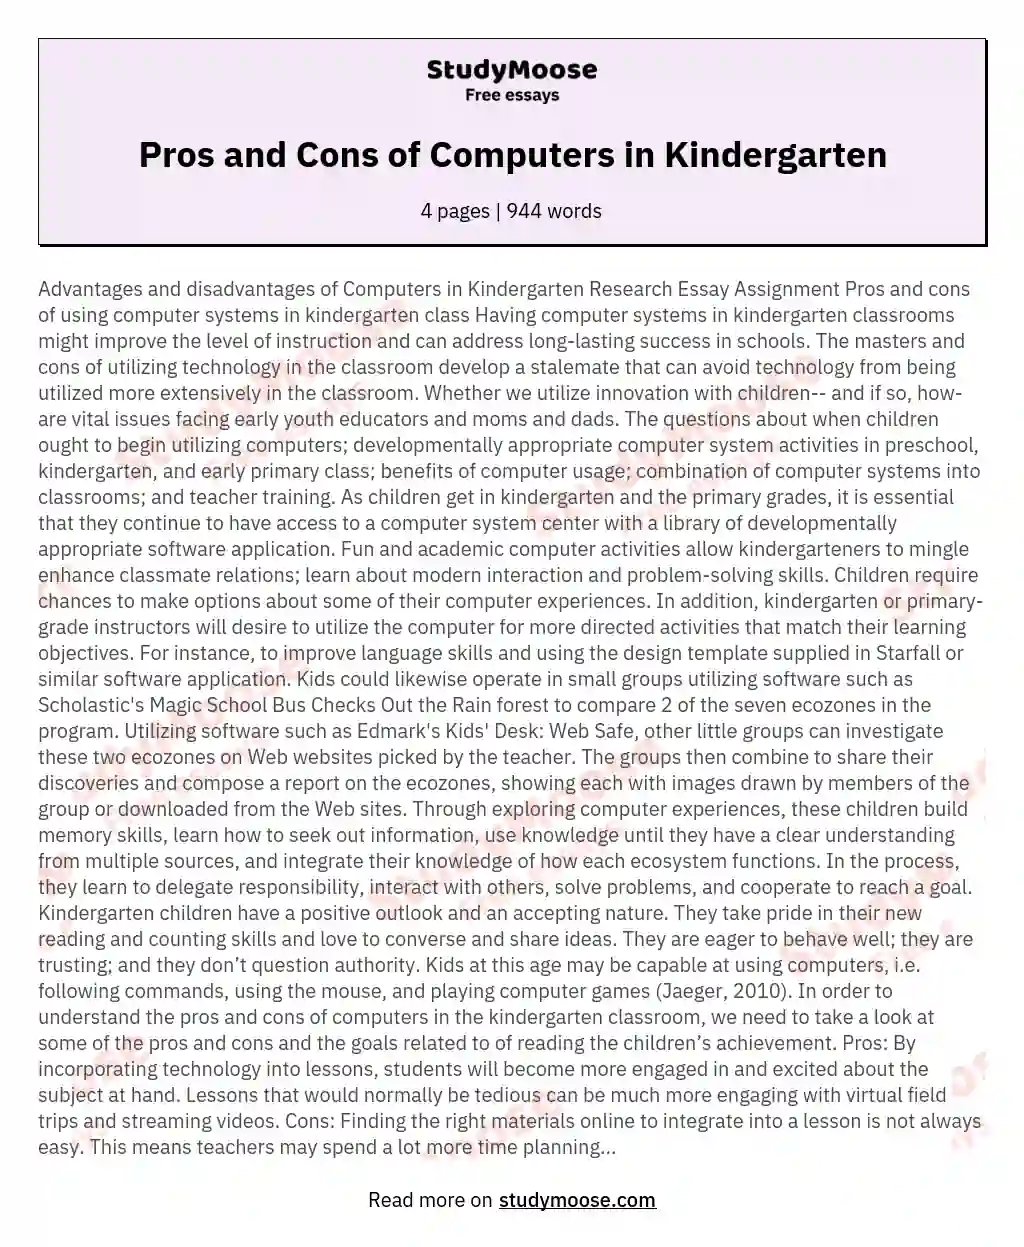 Pros and Cons of Computers in Kindergarten essay